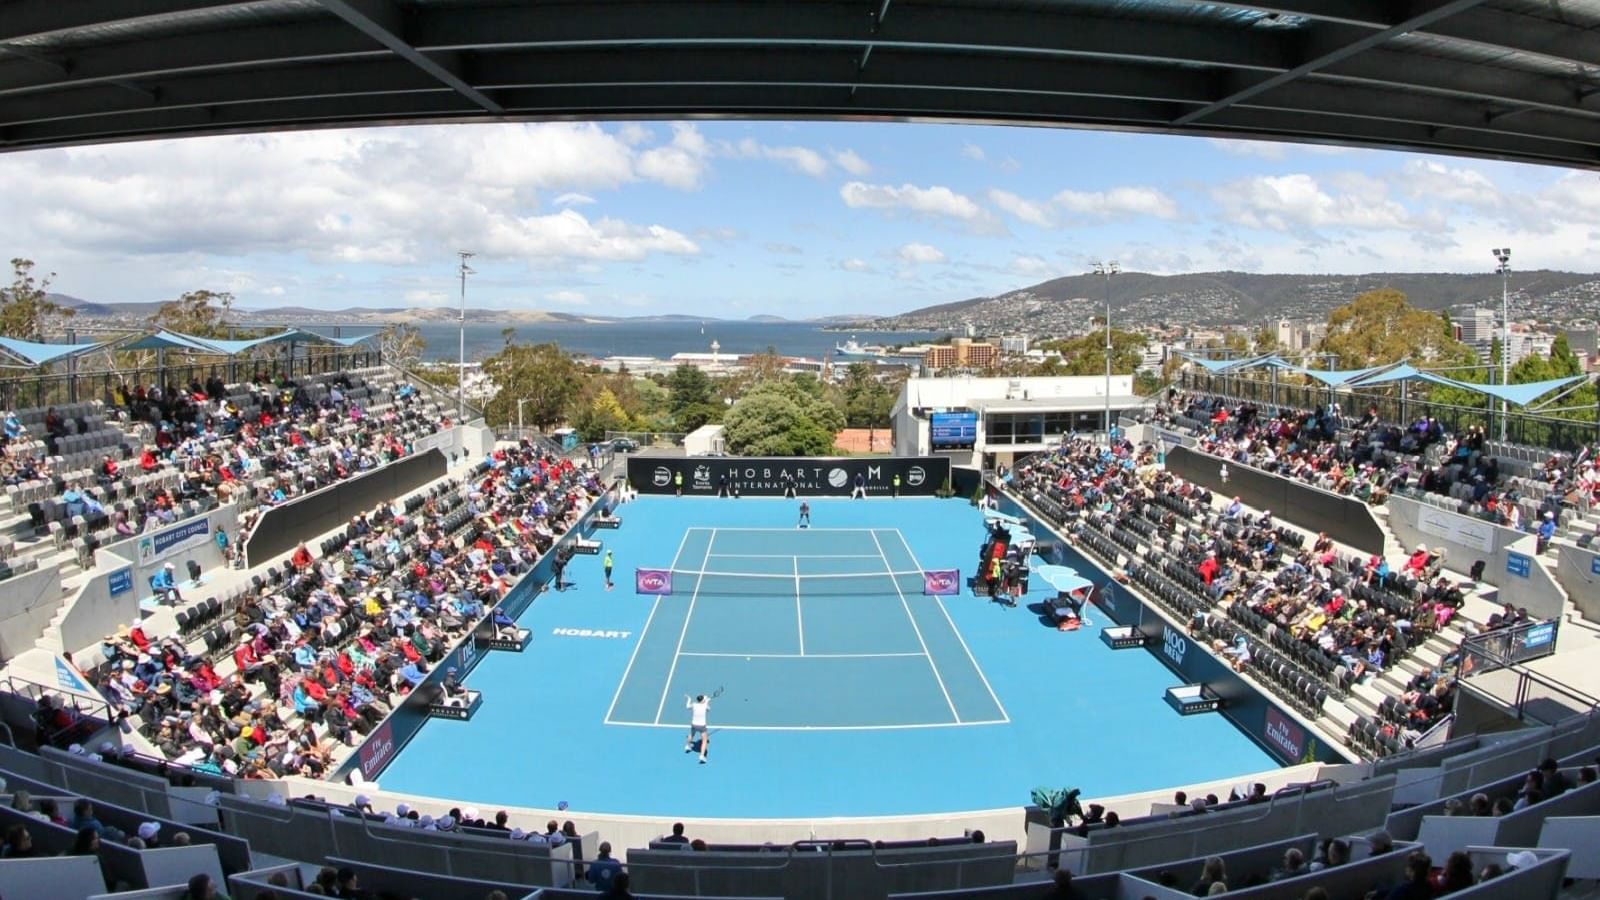 Hobart International Tennis match at Domain Tennis Centre near Hotel Grand Chancellor Hobart